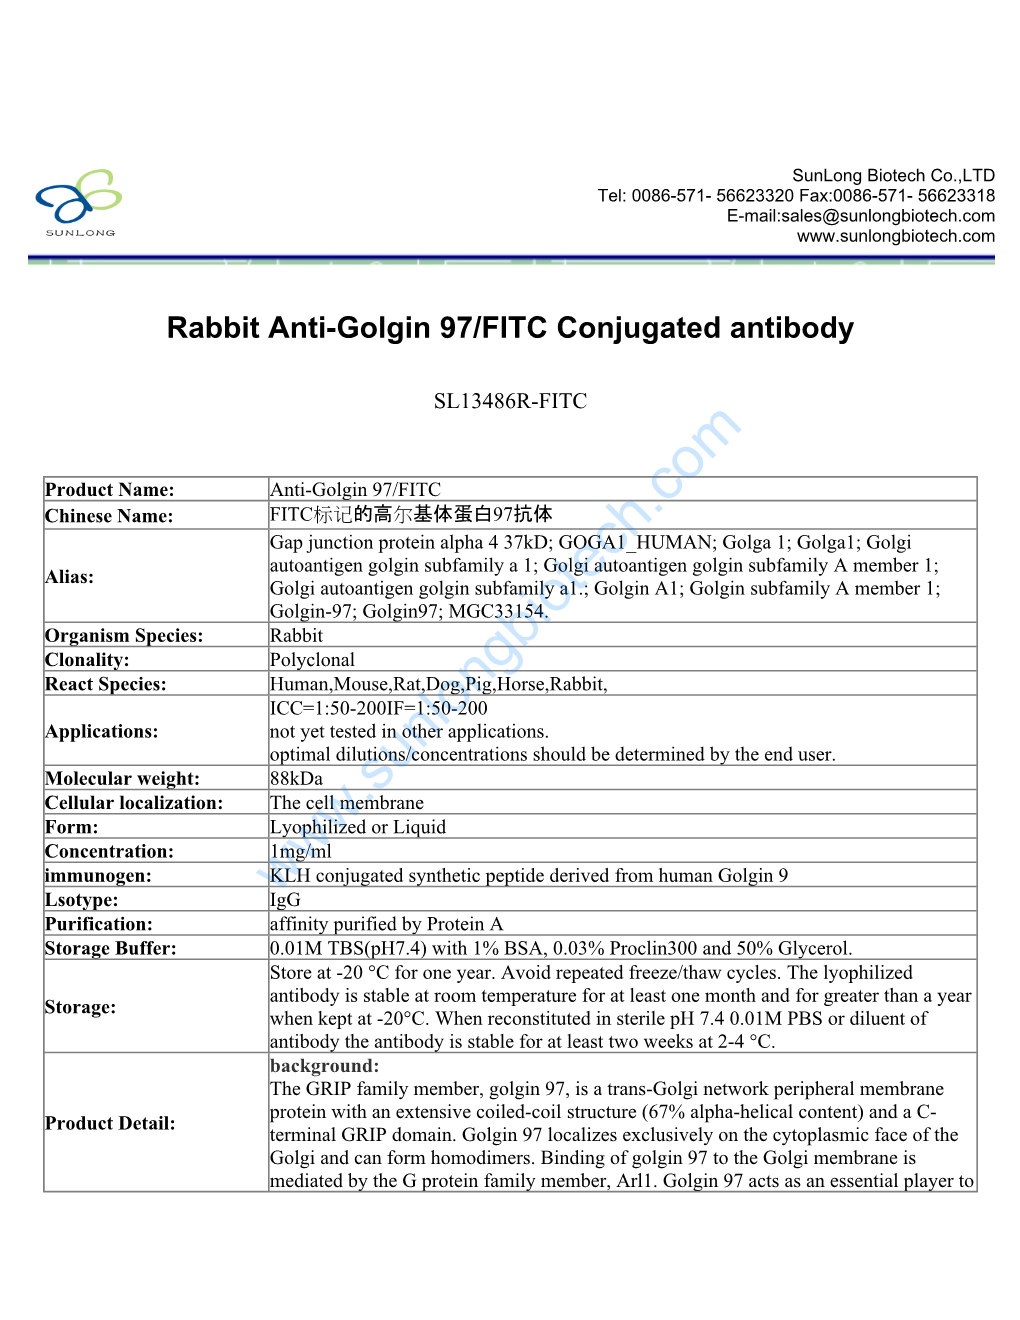 Rabbit Anti-Golgin 97/FITC Conjugated Antibody-SL13486R